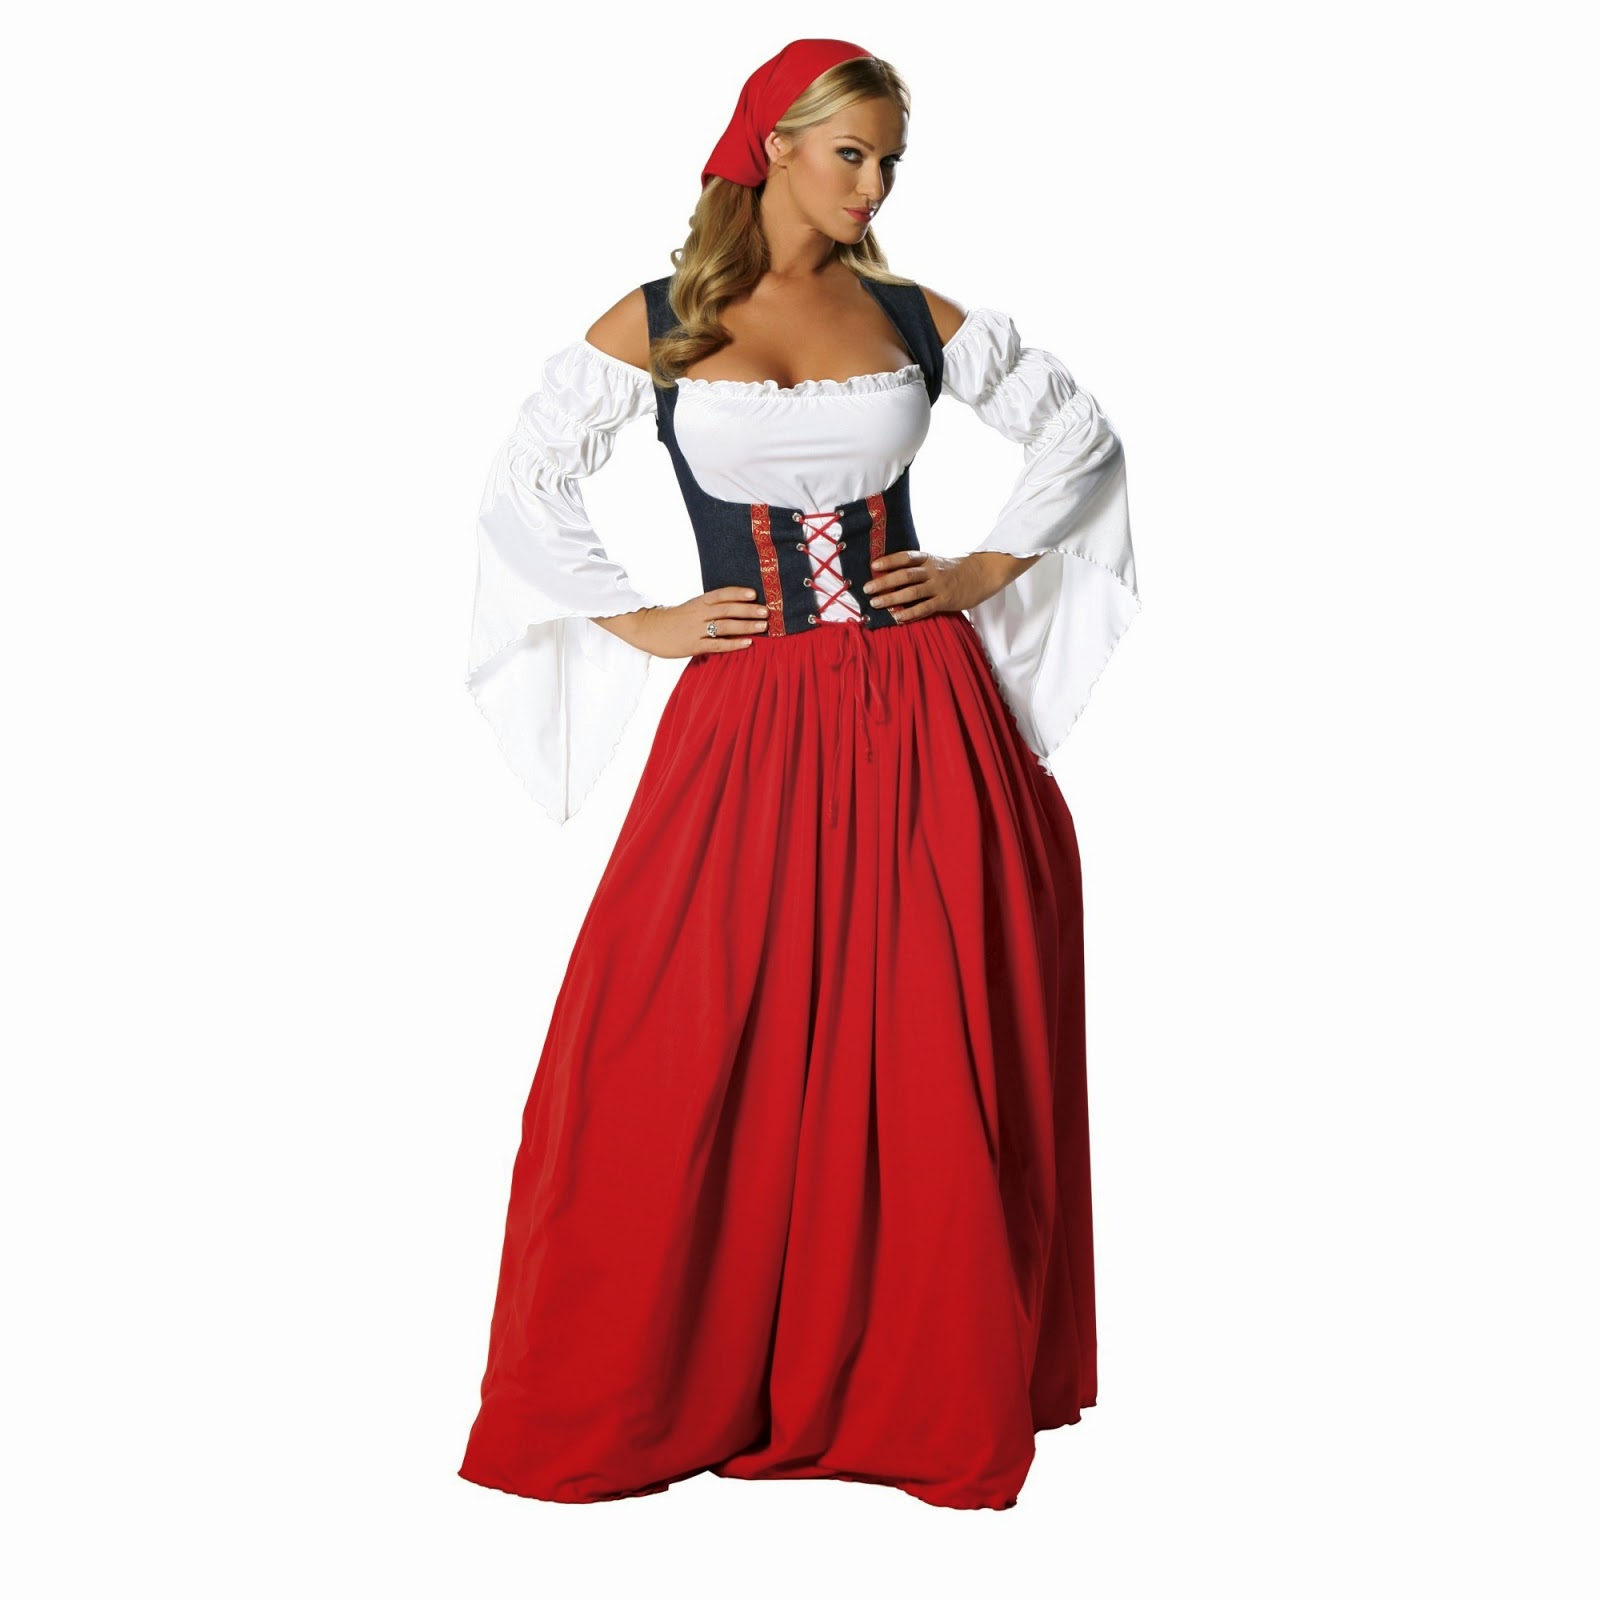  Oktoberfest costumes for women